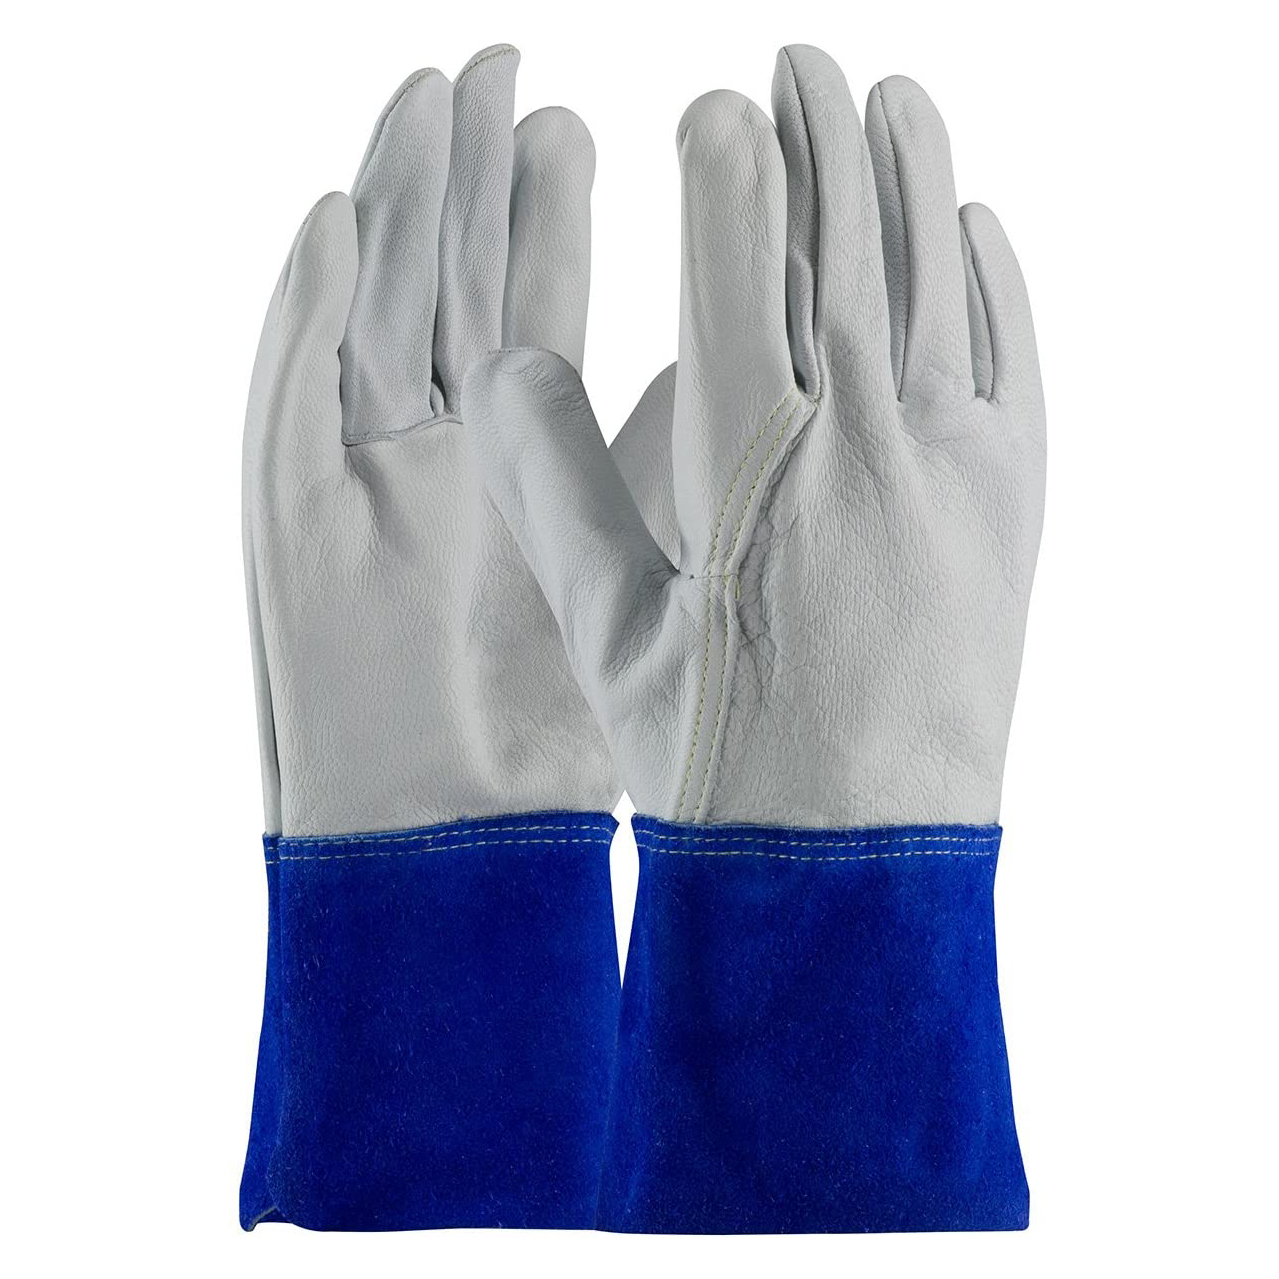 Goatskin Leather Mig Tig Welders Glove w/Kevlar Stitching, XL